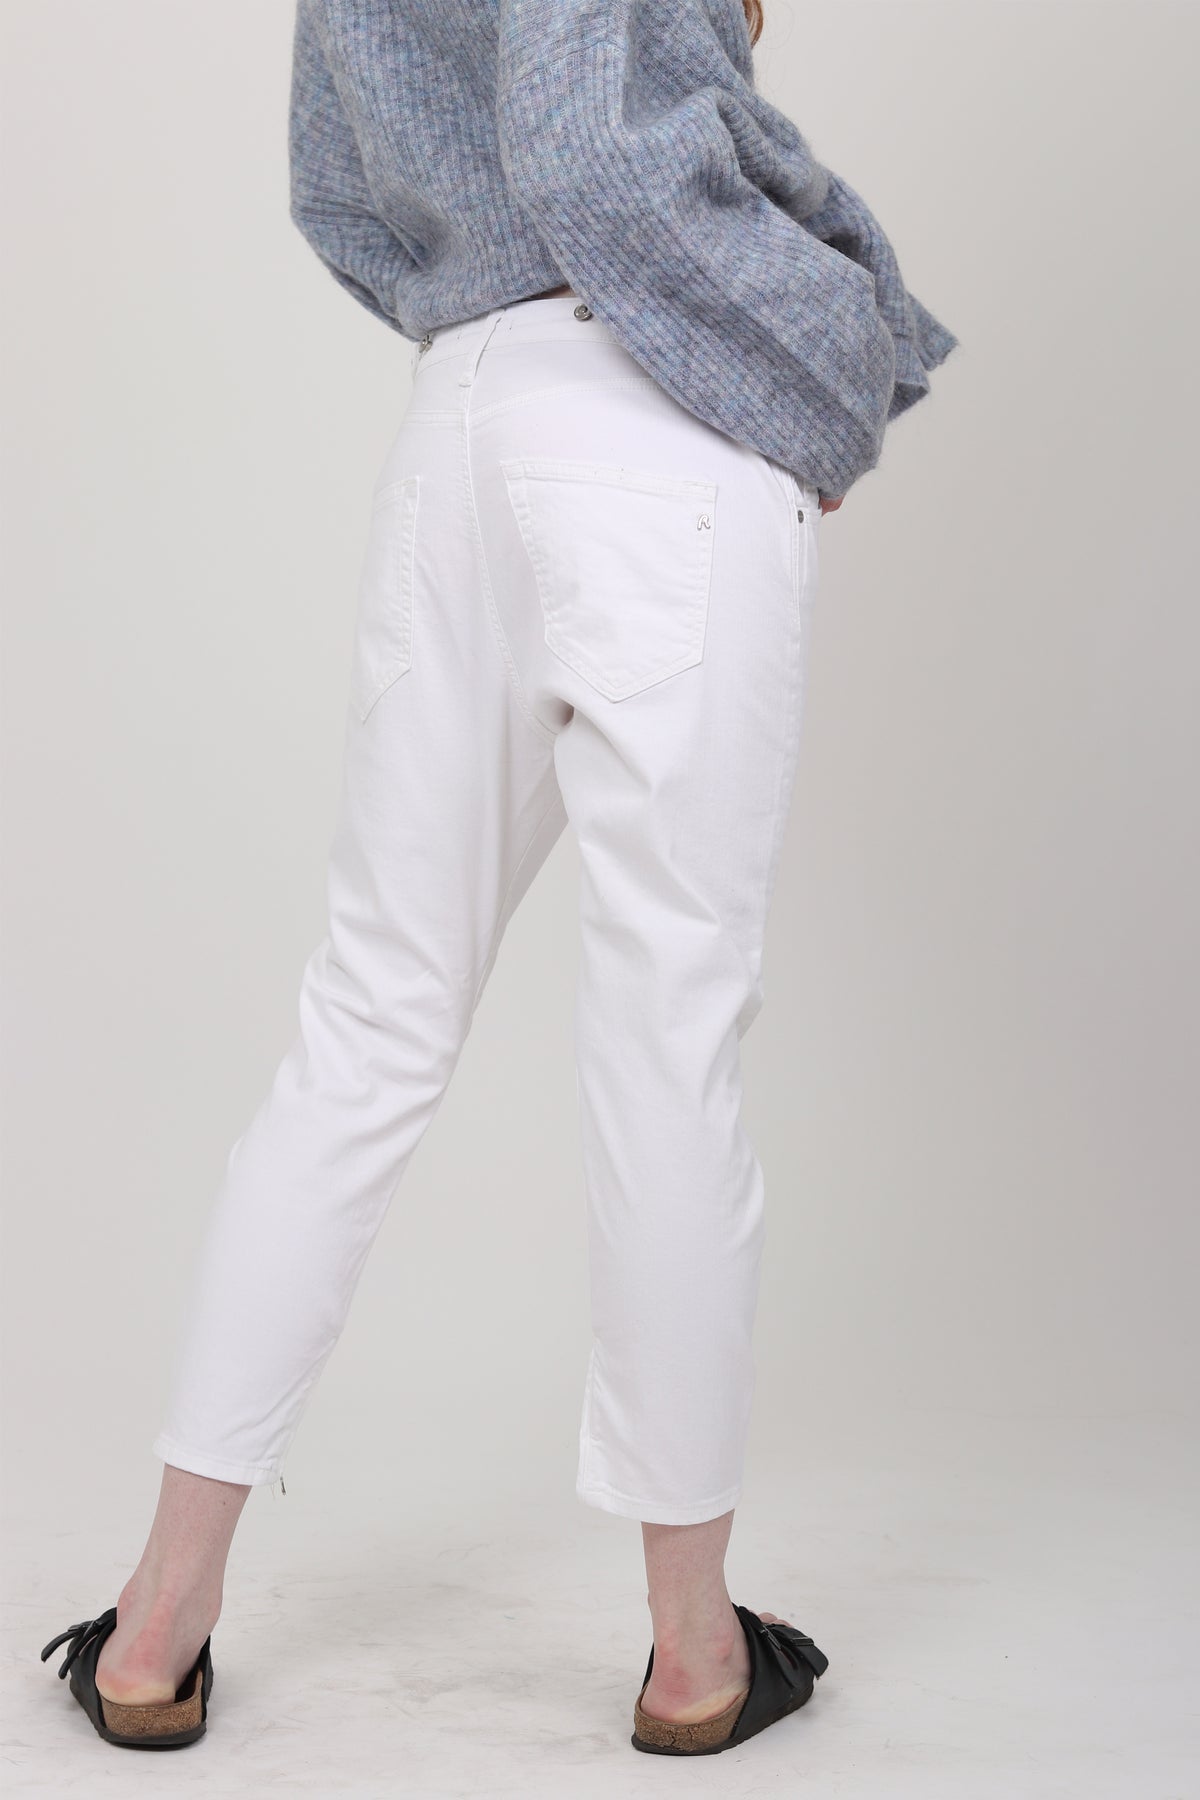 Boyfit Ankle Zip Jeans - White - Replay - Bukser & Shorts - VILLOID.no